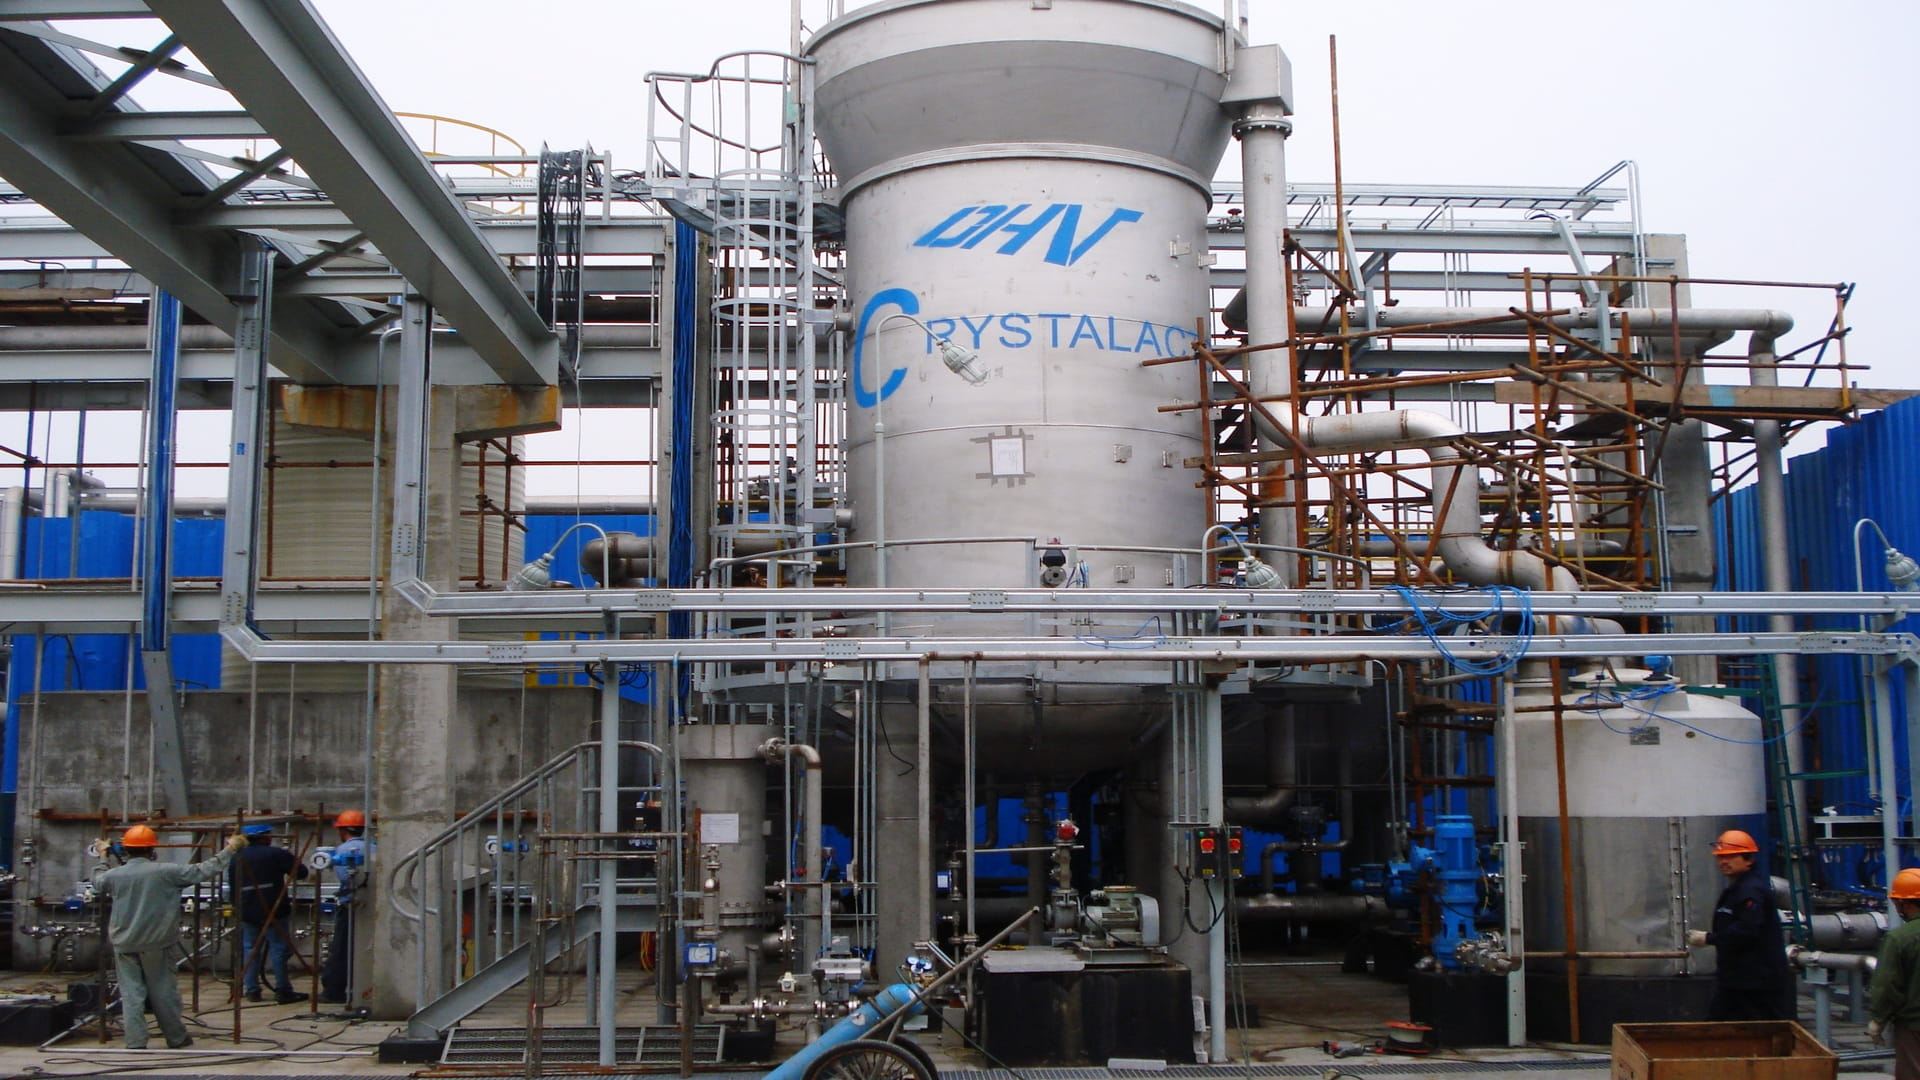 Crystalactor plant